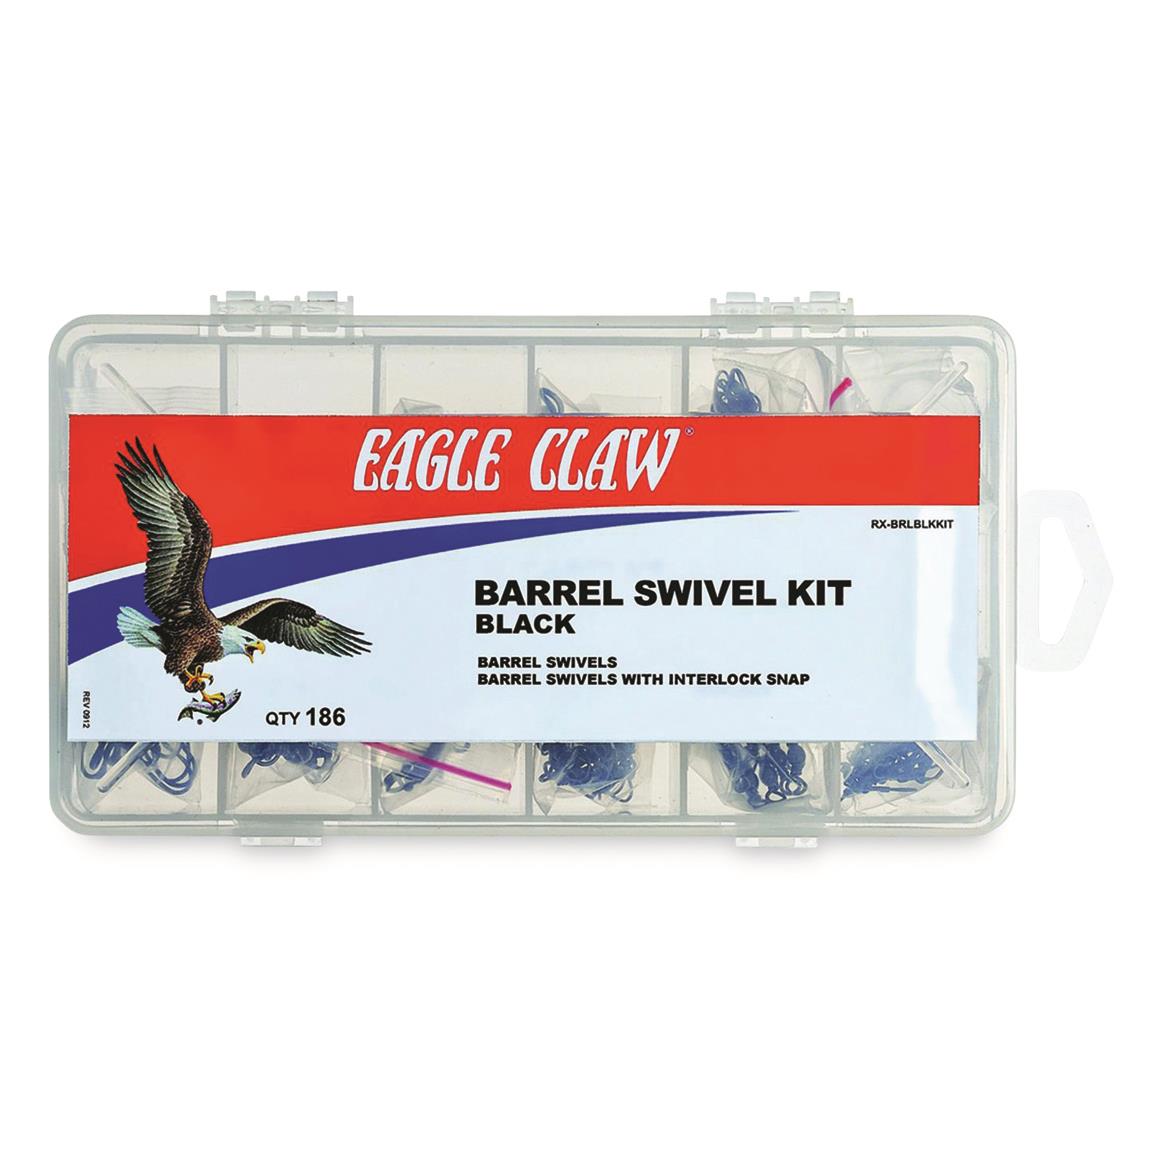 Eagle Claw Barrel Swivel Kit with Interlock Snaps